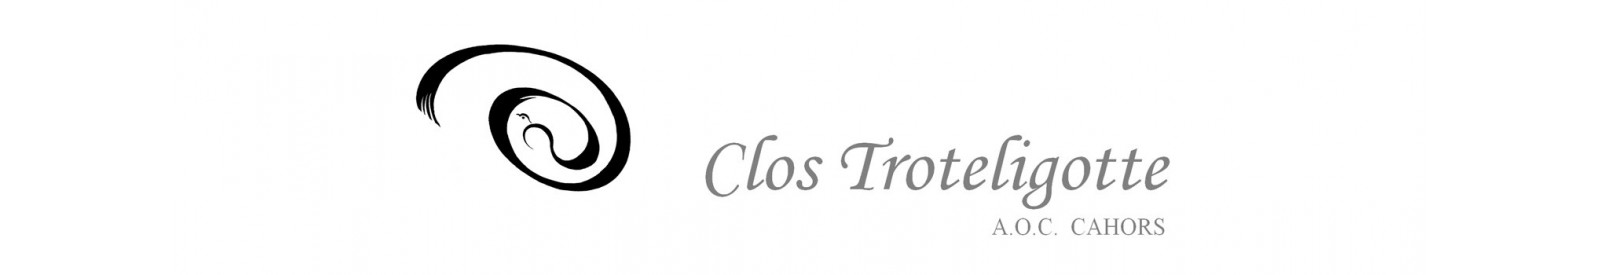 Clos Troteligotte - Cahors - Organic wine